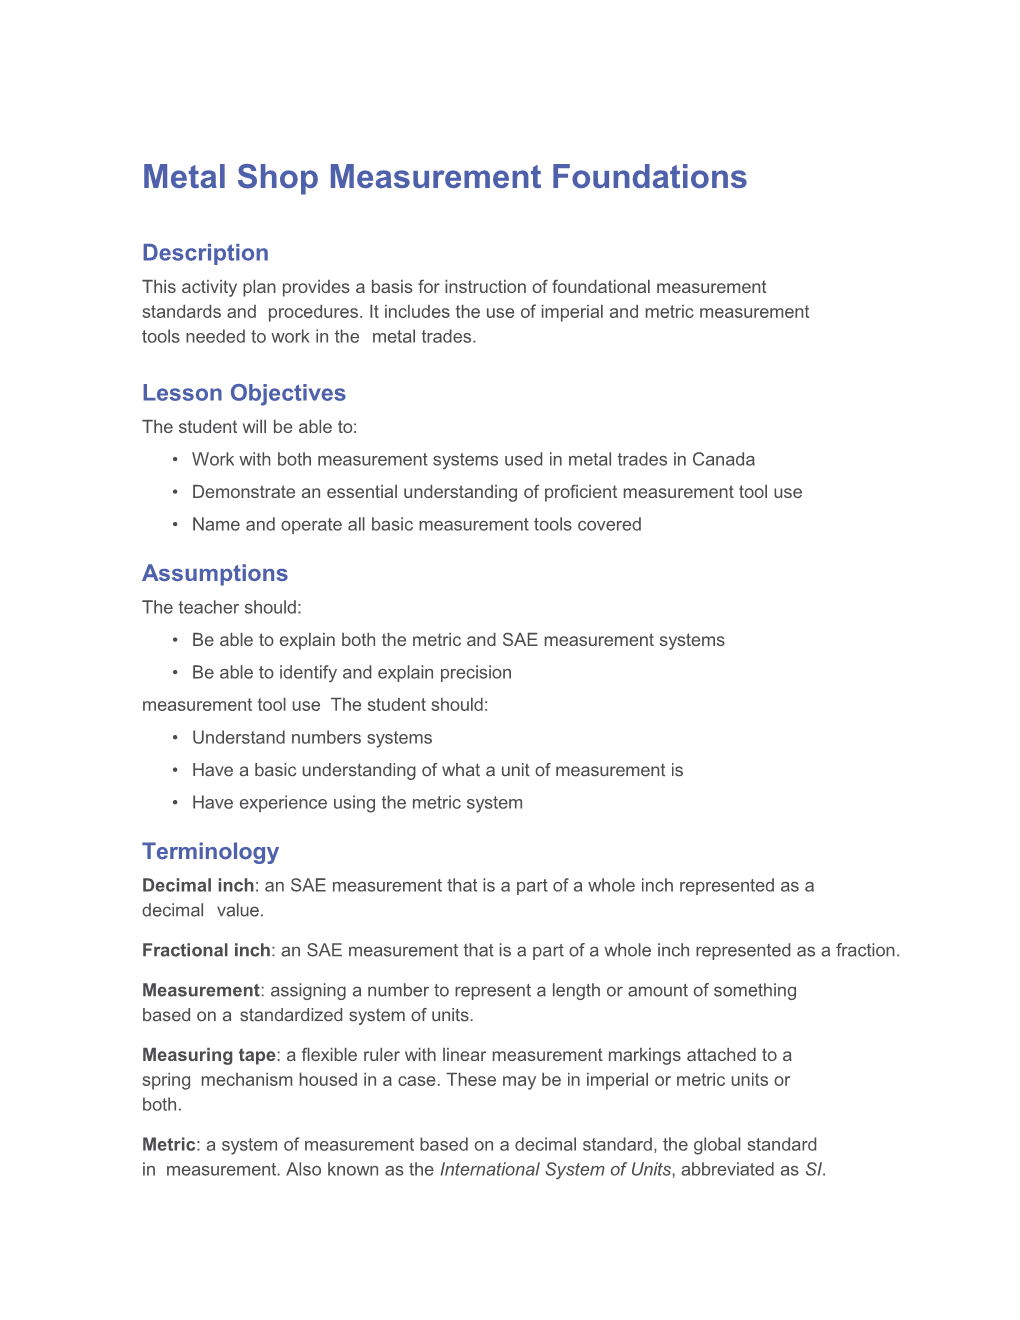 Work Withboth Measurementsystemsusedinmetal Trades in Canada